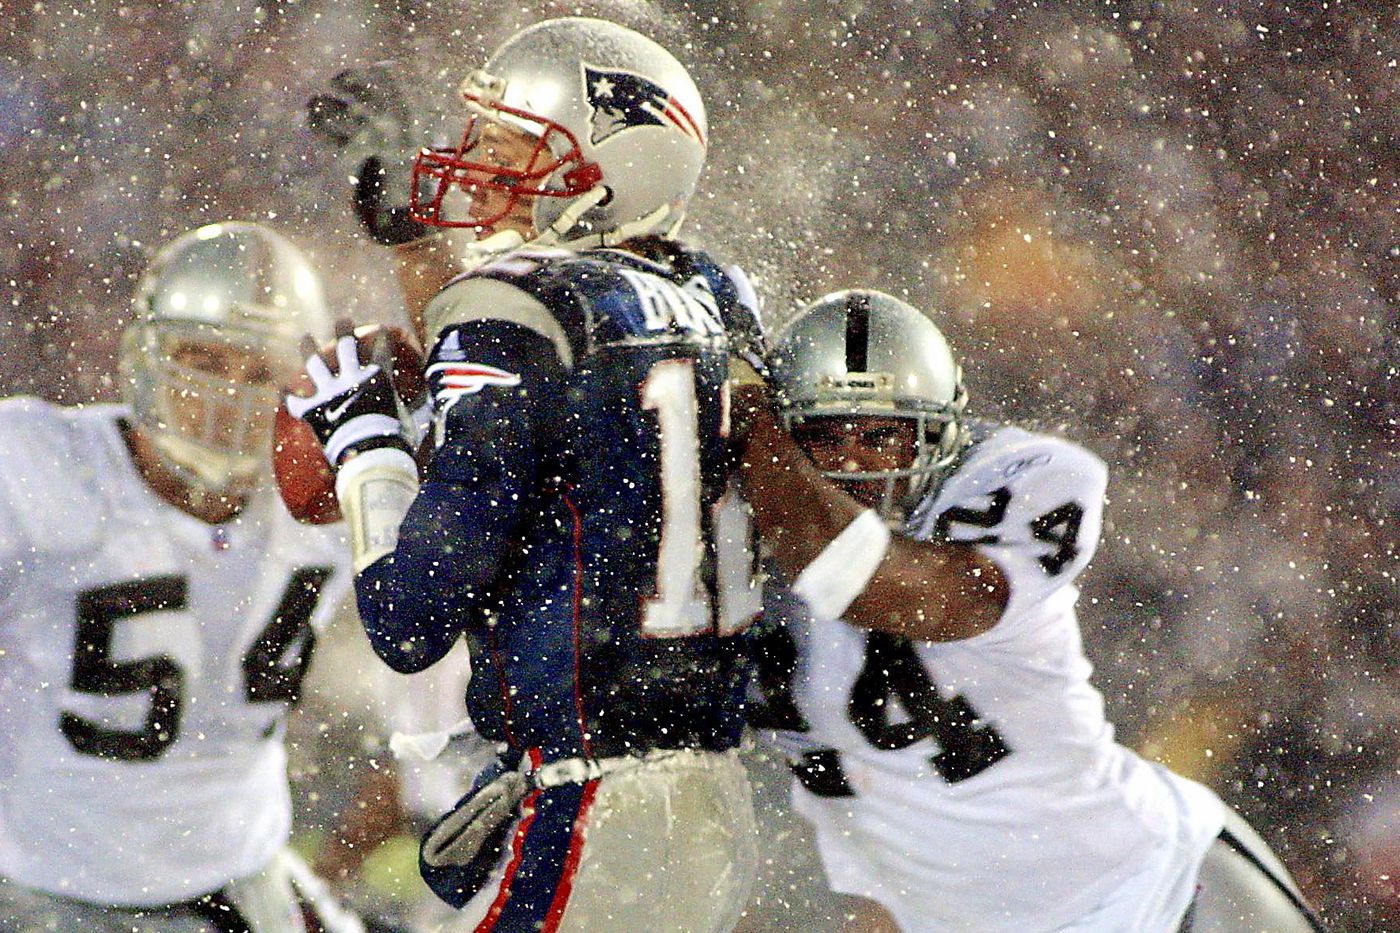 Raiders news: Where will Tom Brady play in 2023? - Silver And Black Pride